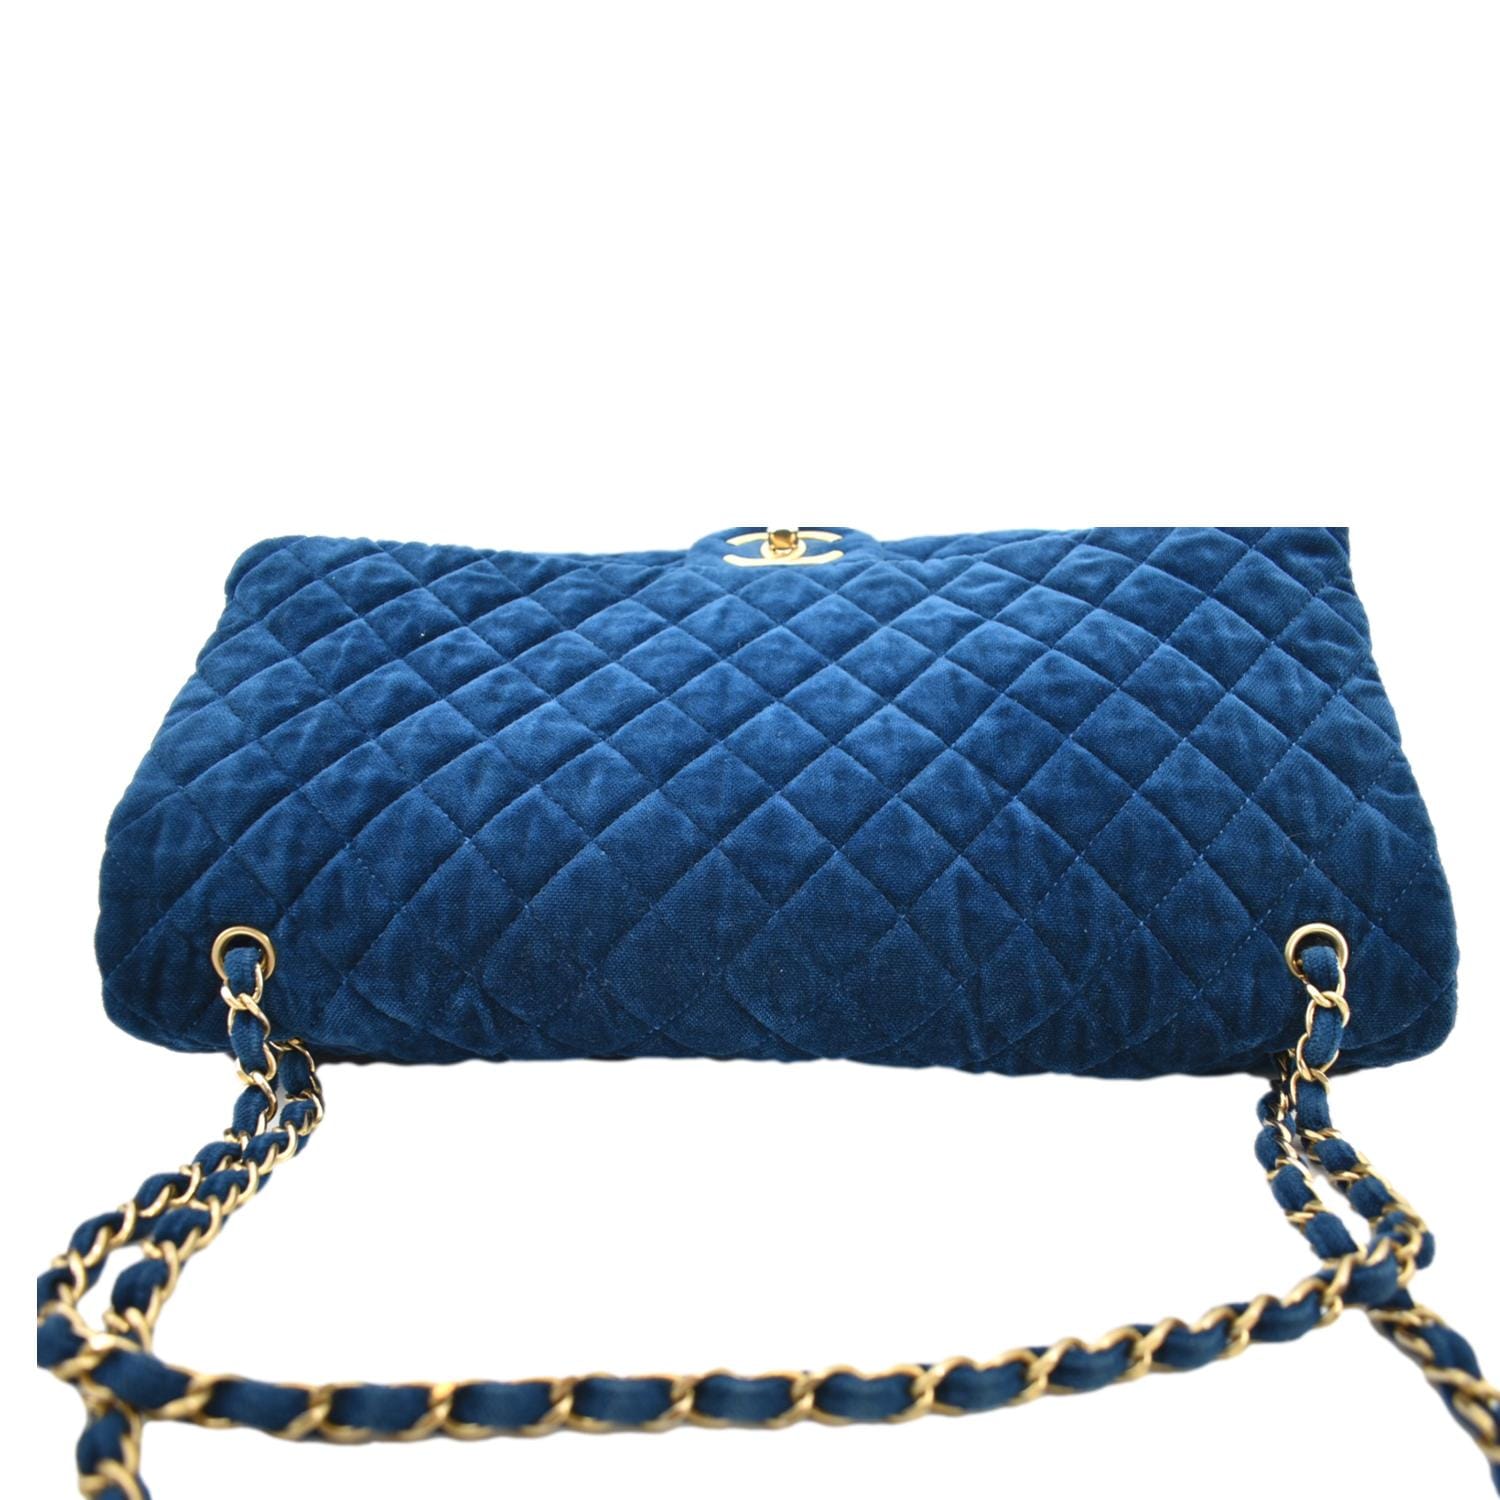 Authentic Preowned Chanel Velvet Classic CC Flap Bag